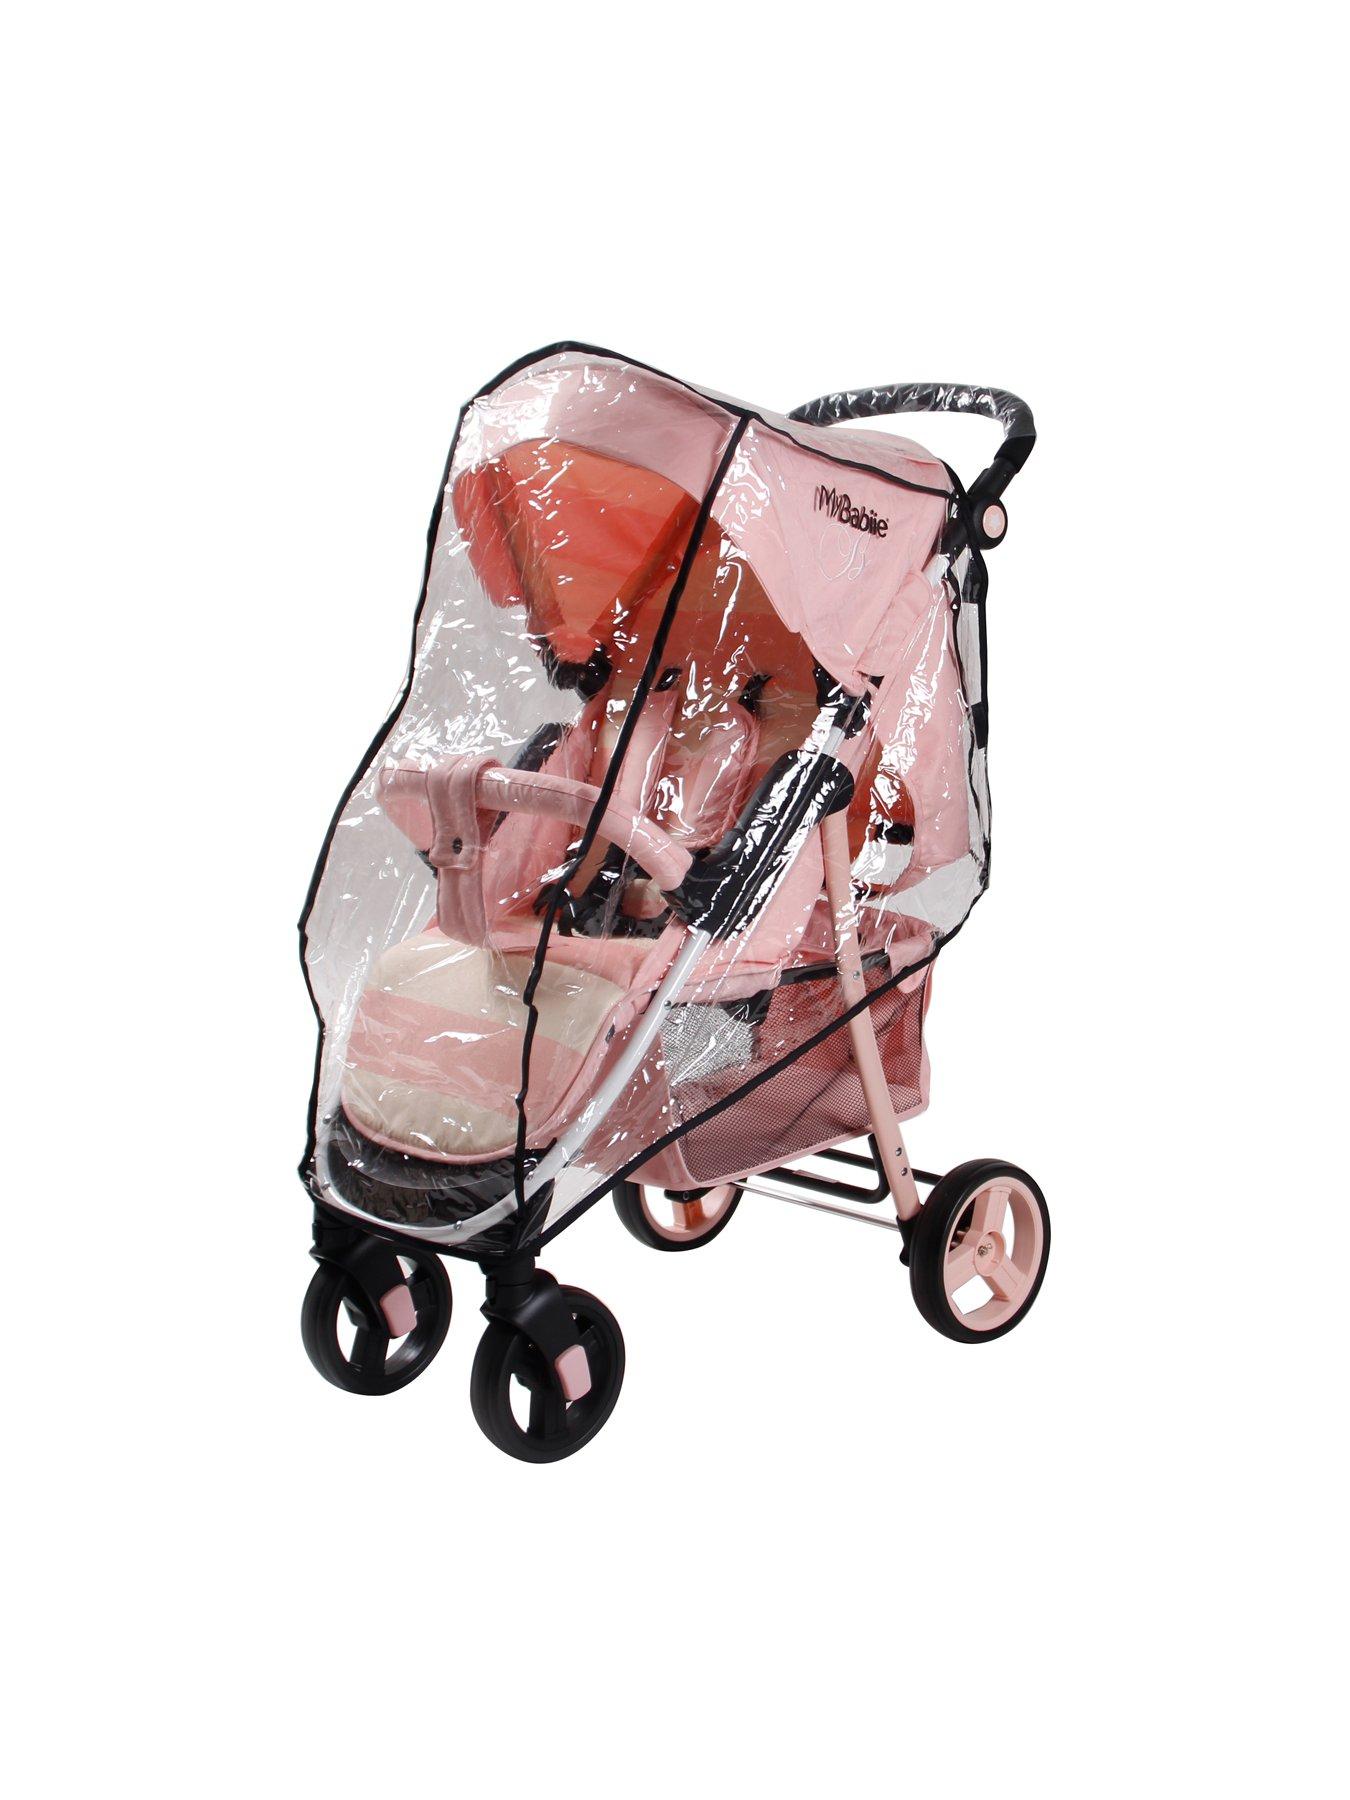 billie faiers pink stroller